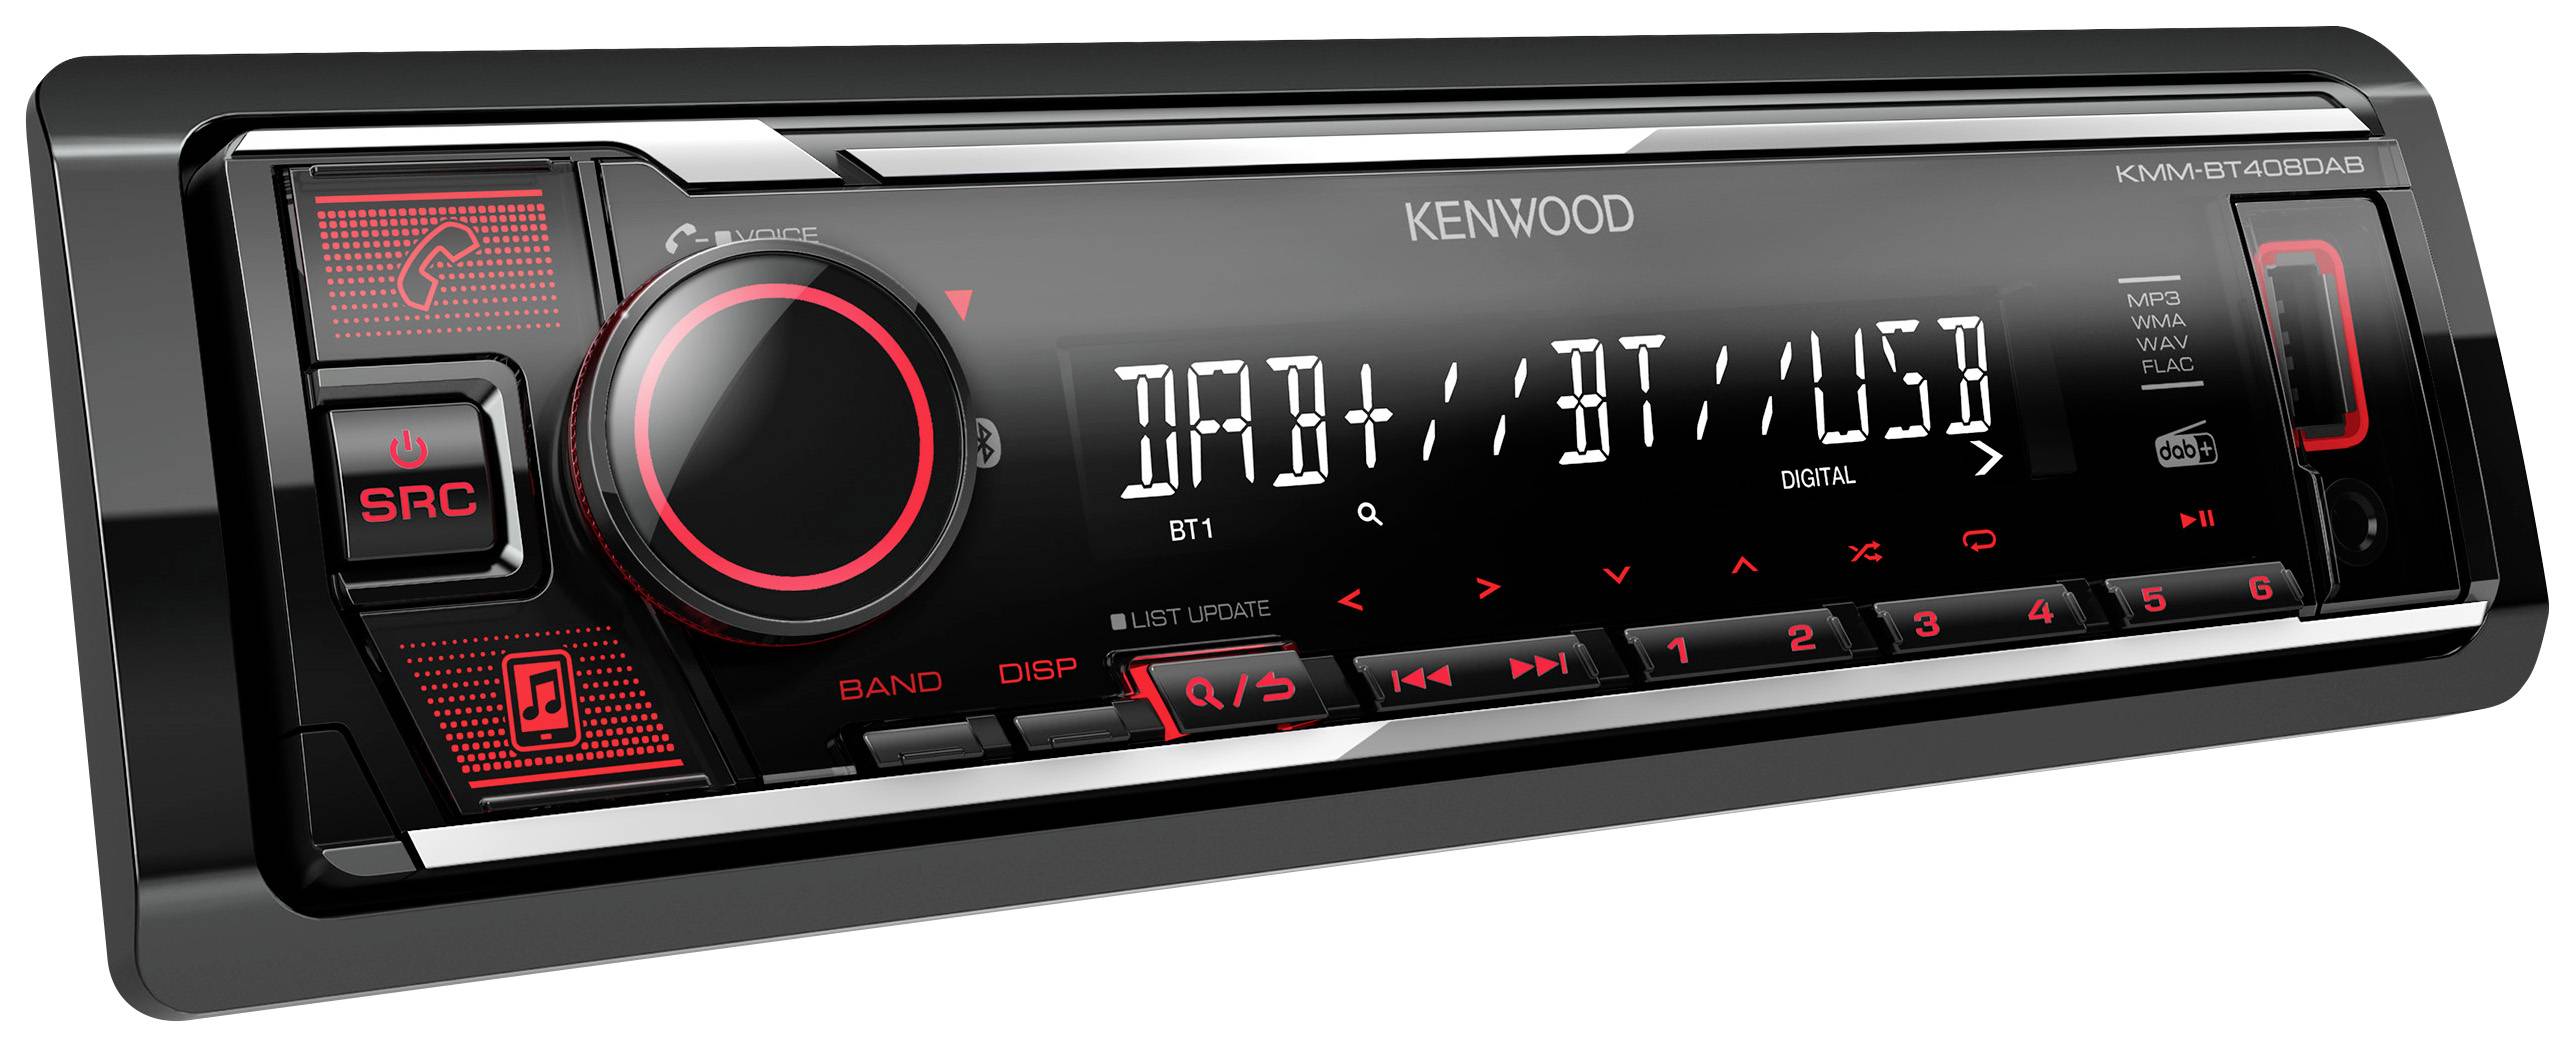 Kenwood KMMBT408DAB stereo handsfree set, Steering wheel RC button DAB+ tuner | Conrad.com